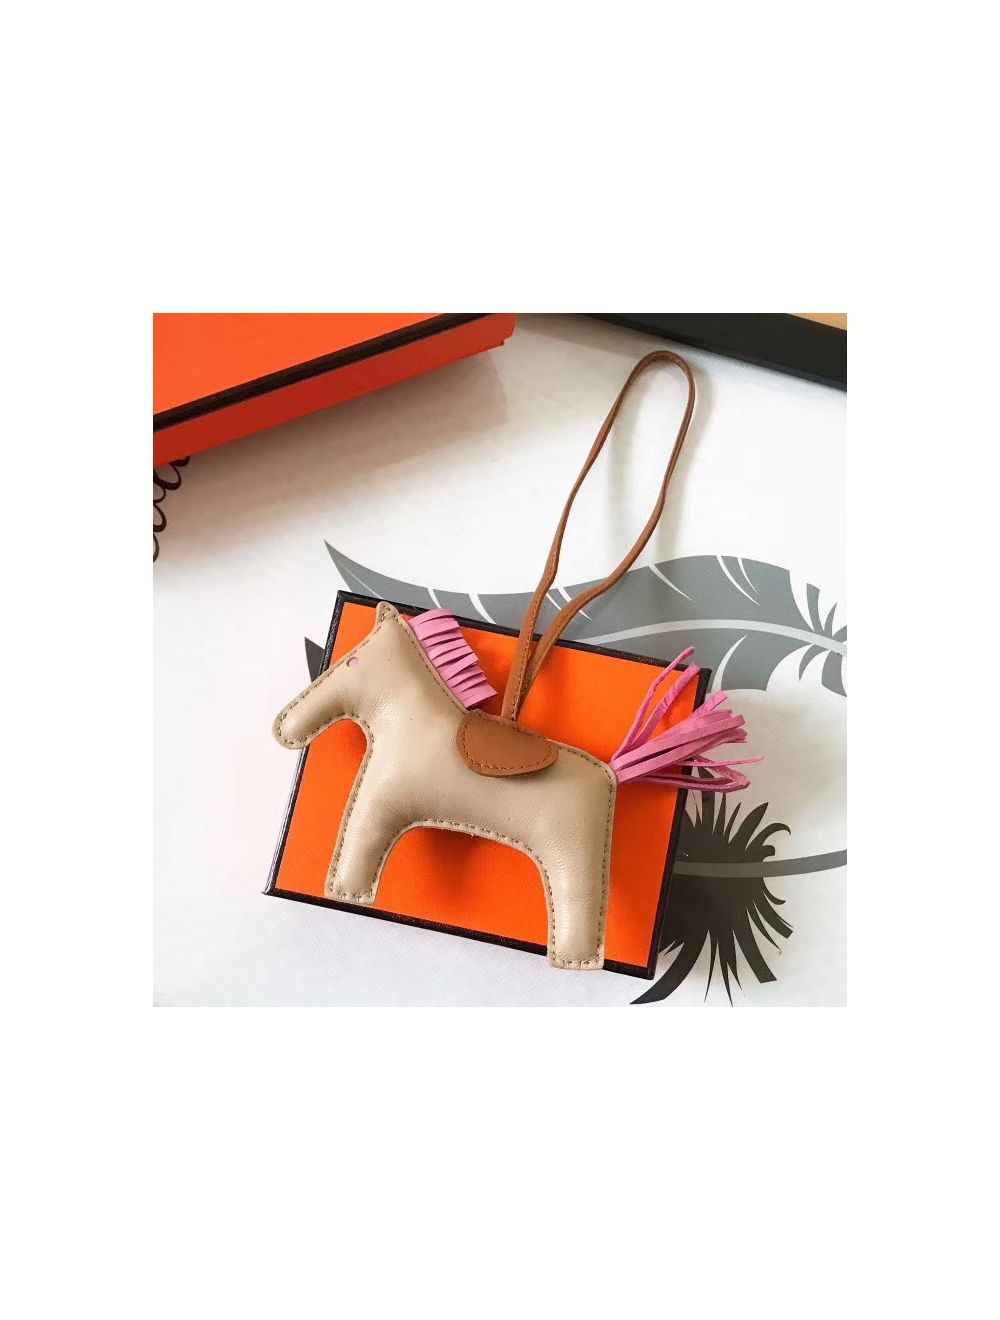 Hermes Rodeo Horse Bag Charm In Beige/Camarel/Pink Leather